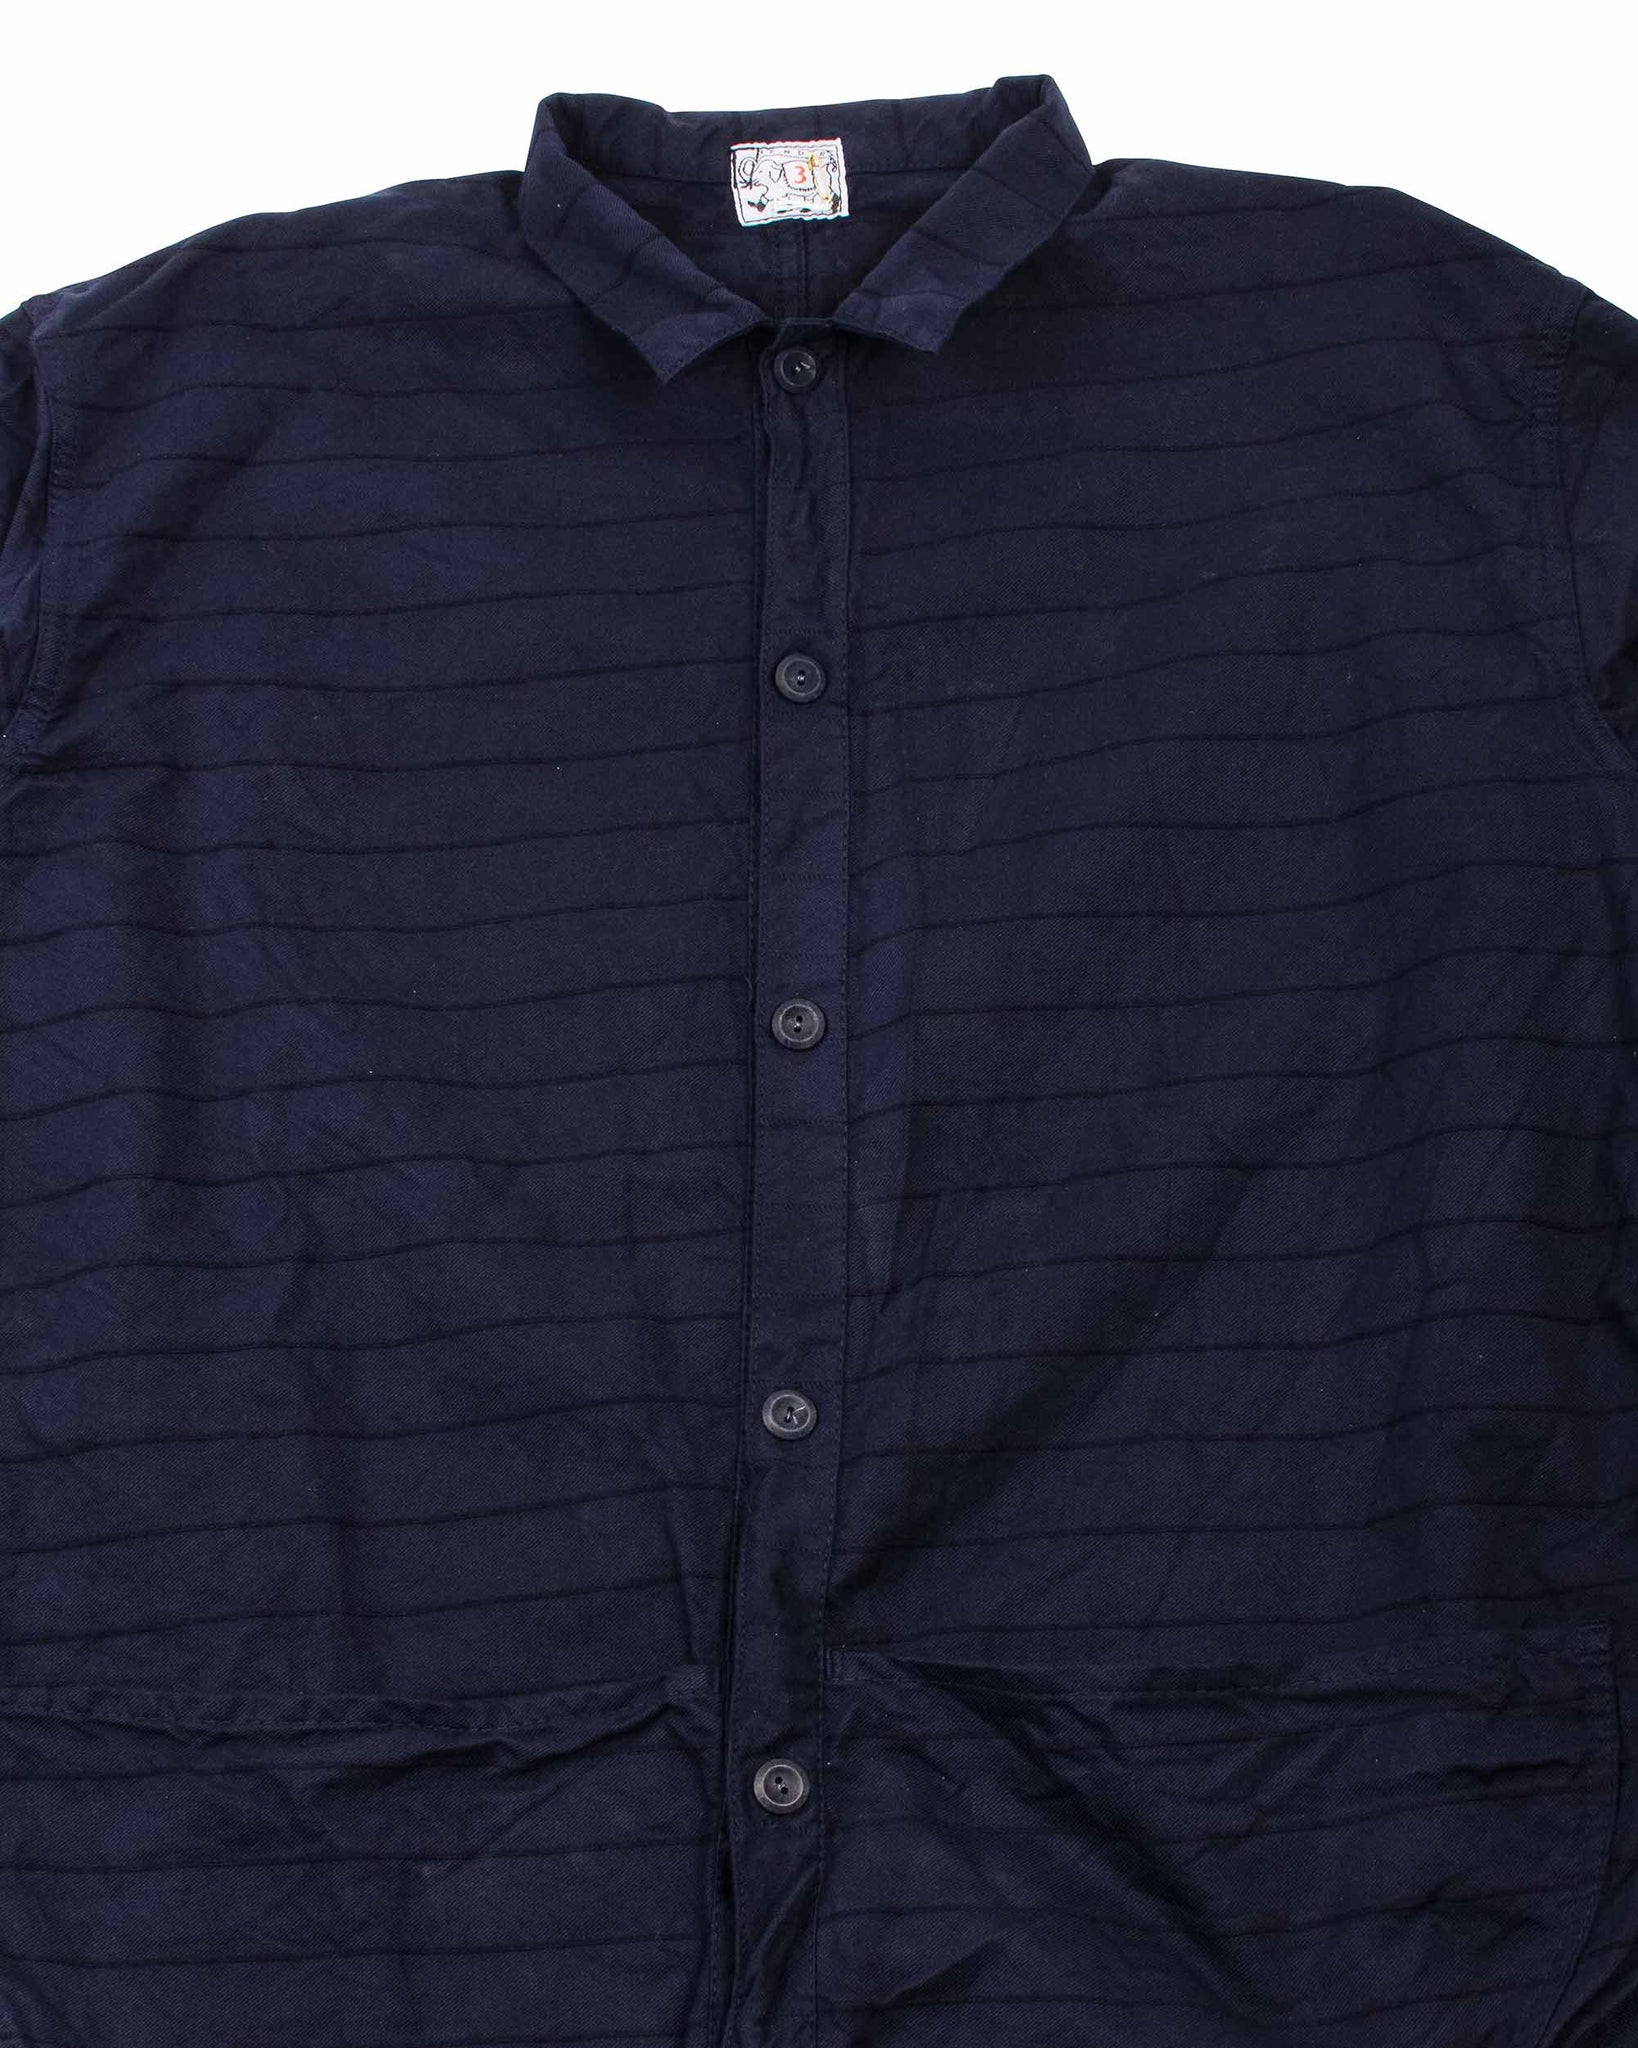 Tender Type 441 Compass Pocket Shirt Inverse Butcher's Stripe Cotton Twill Hadal Blue Details